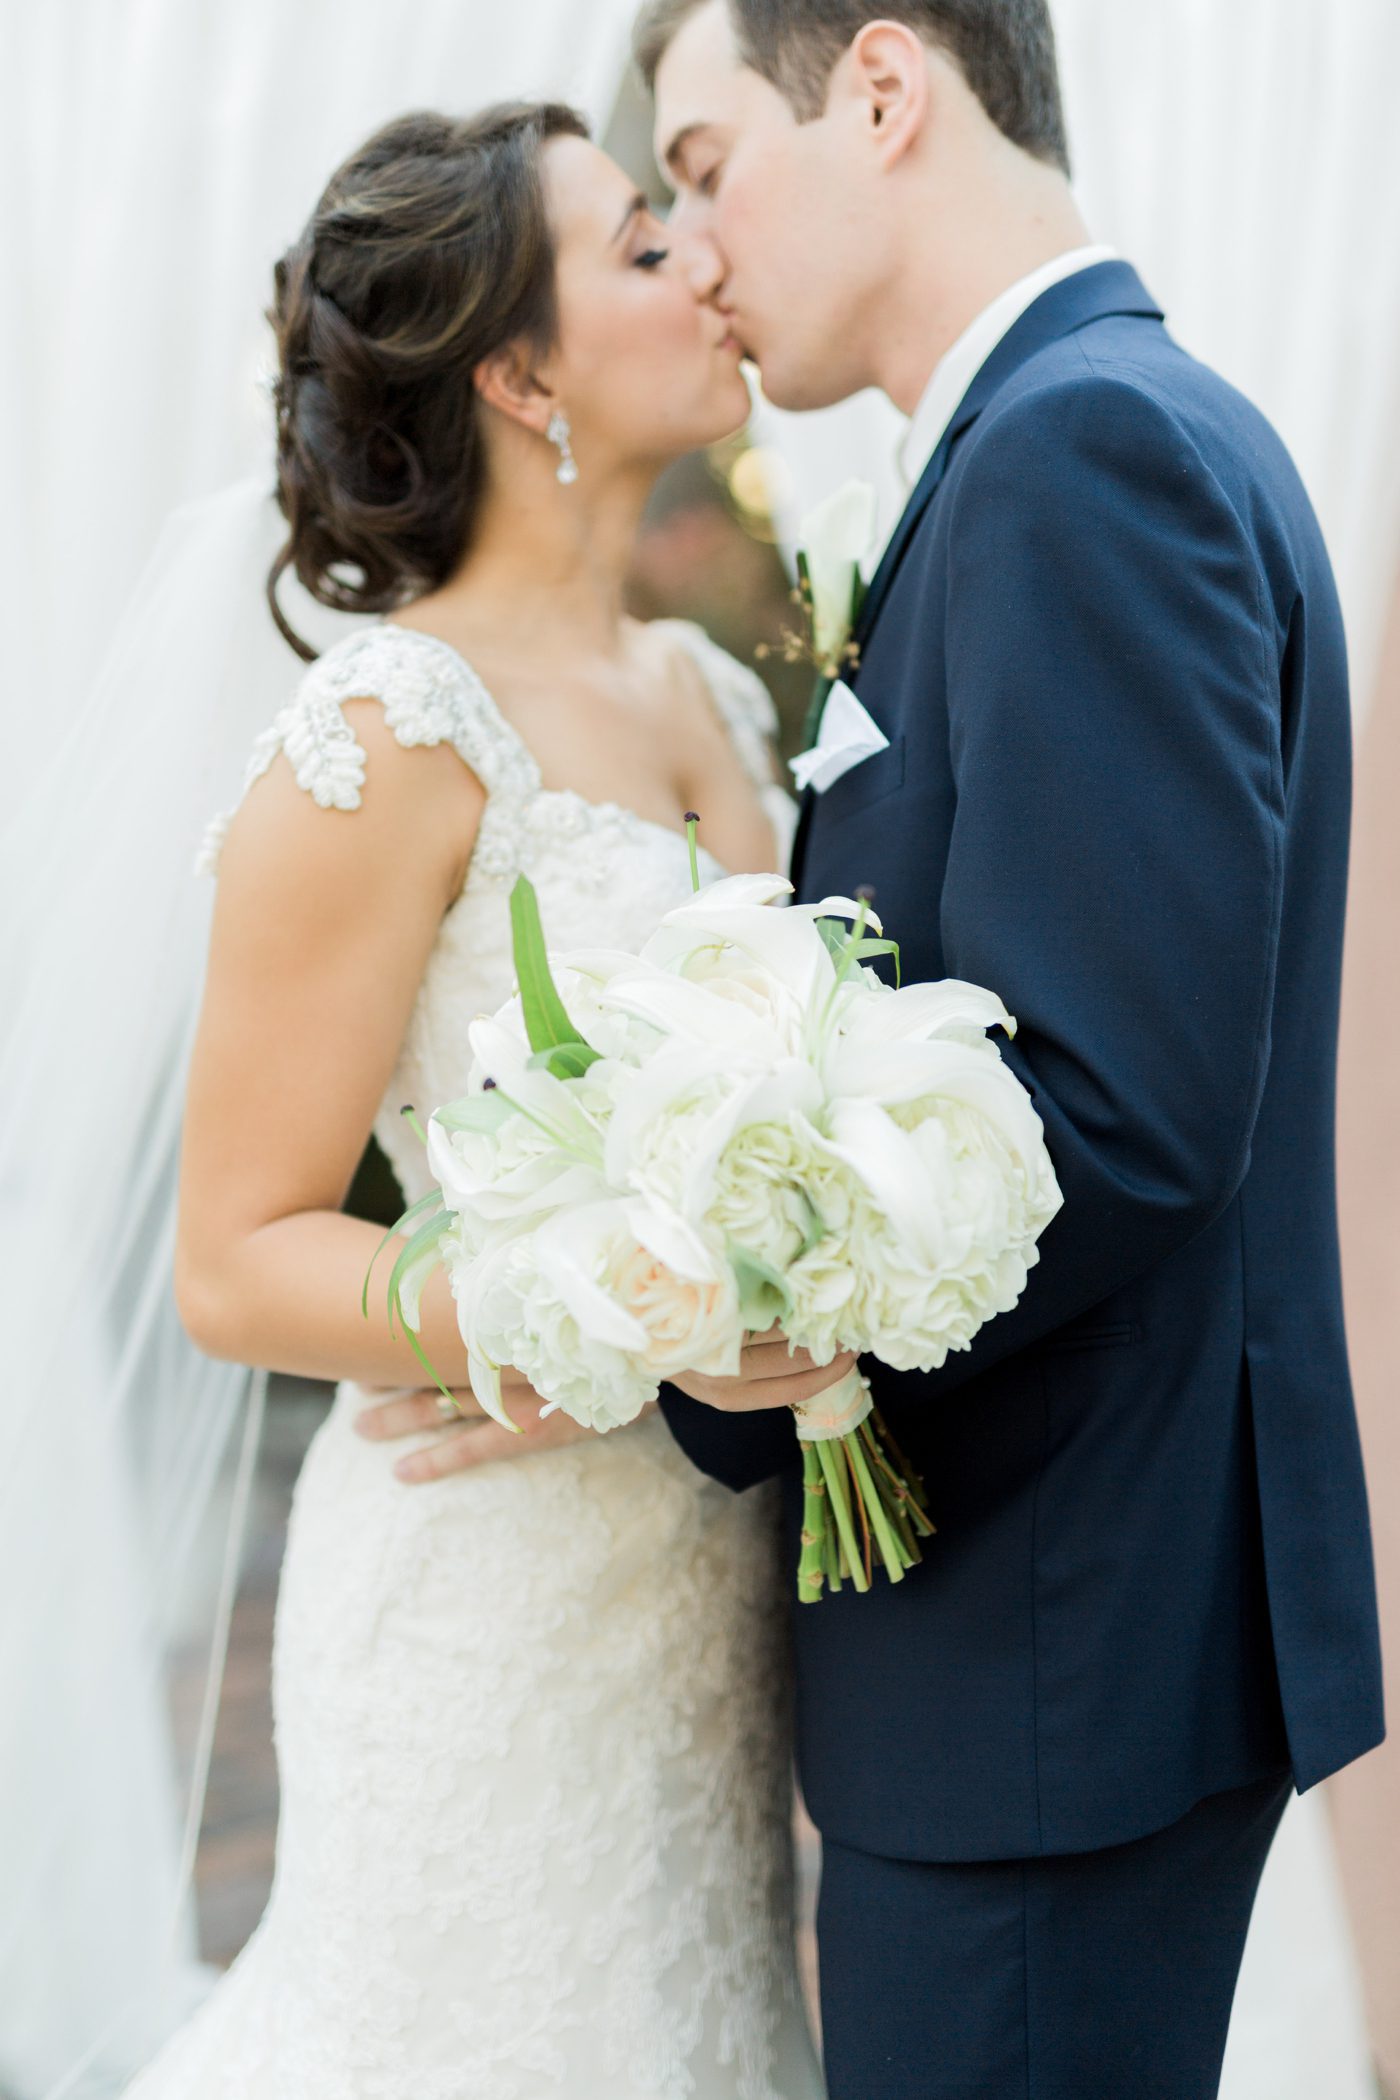 Vinoy renaissance wedding photos | St Petersburg FL wedding photographersCatherine Ann Photography